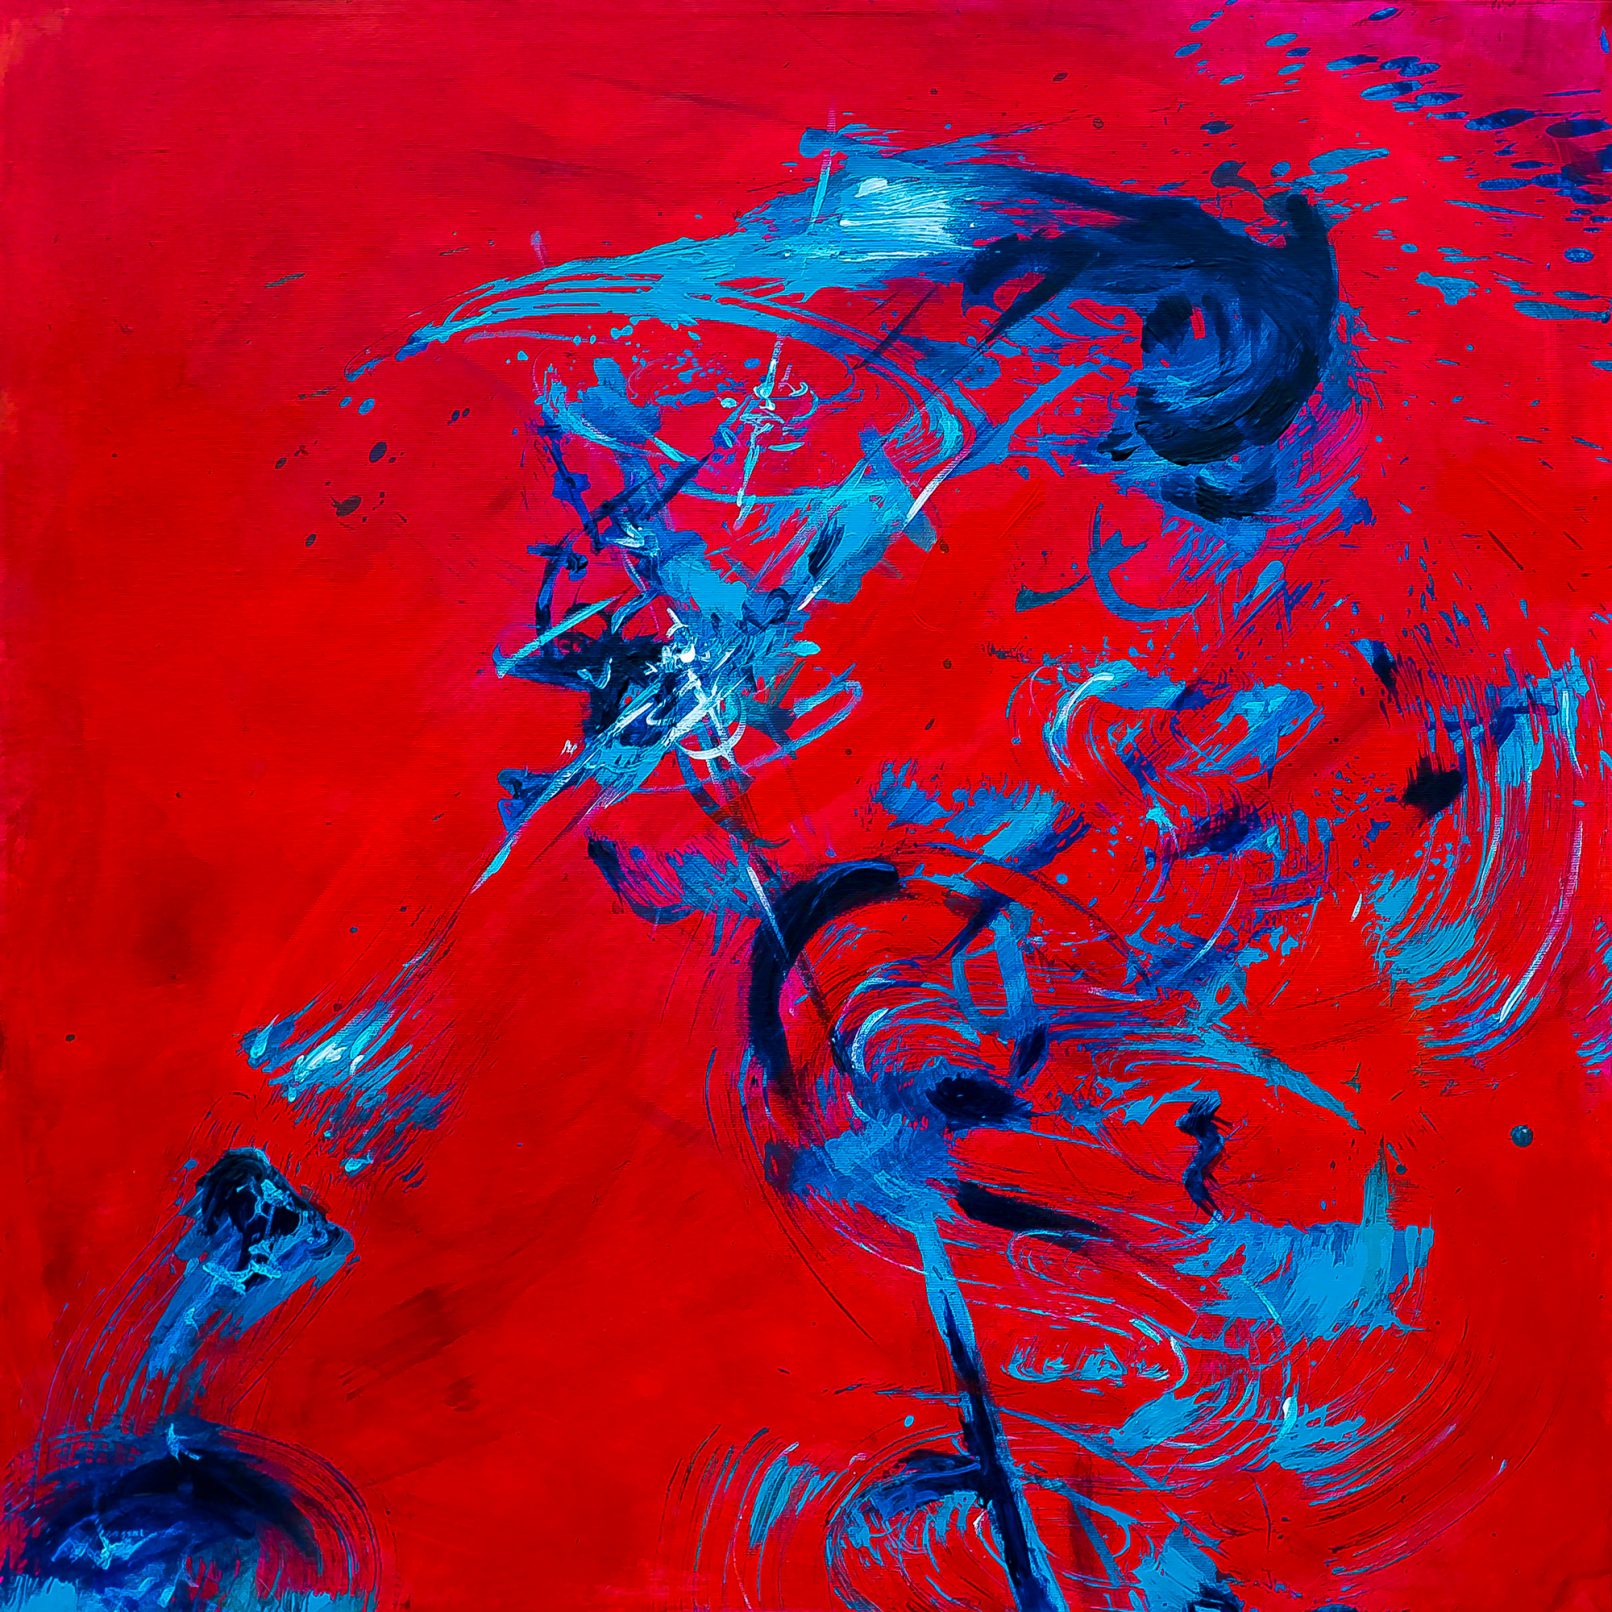 NIO GUARDIANS - RED, 70 x 70 cm, acrylic on canvas, 2017.